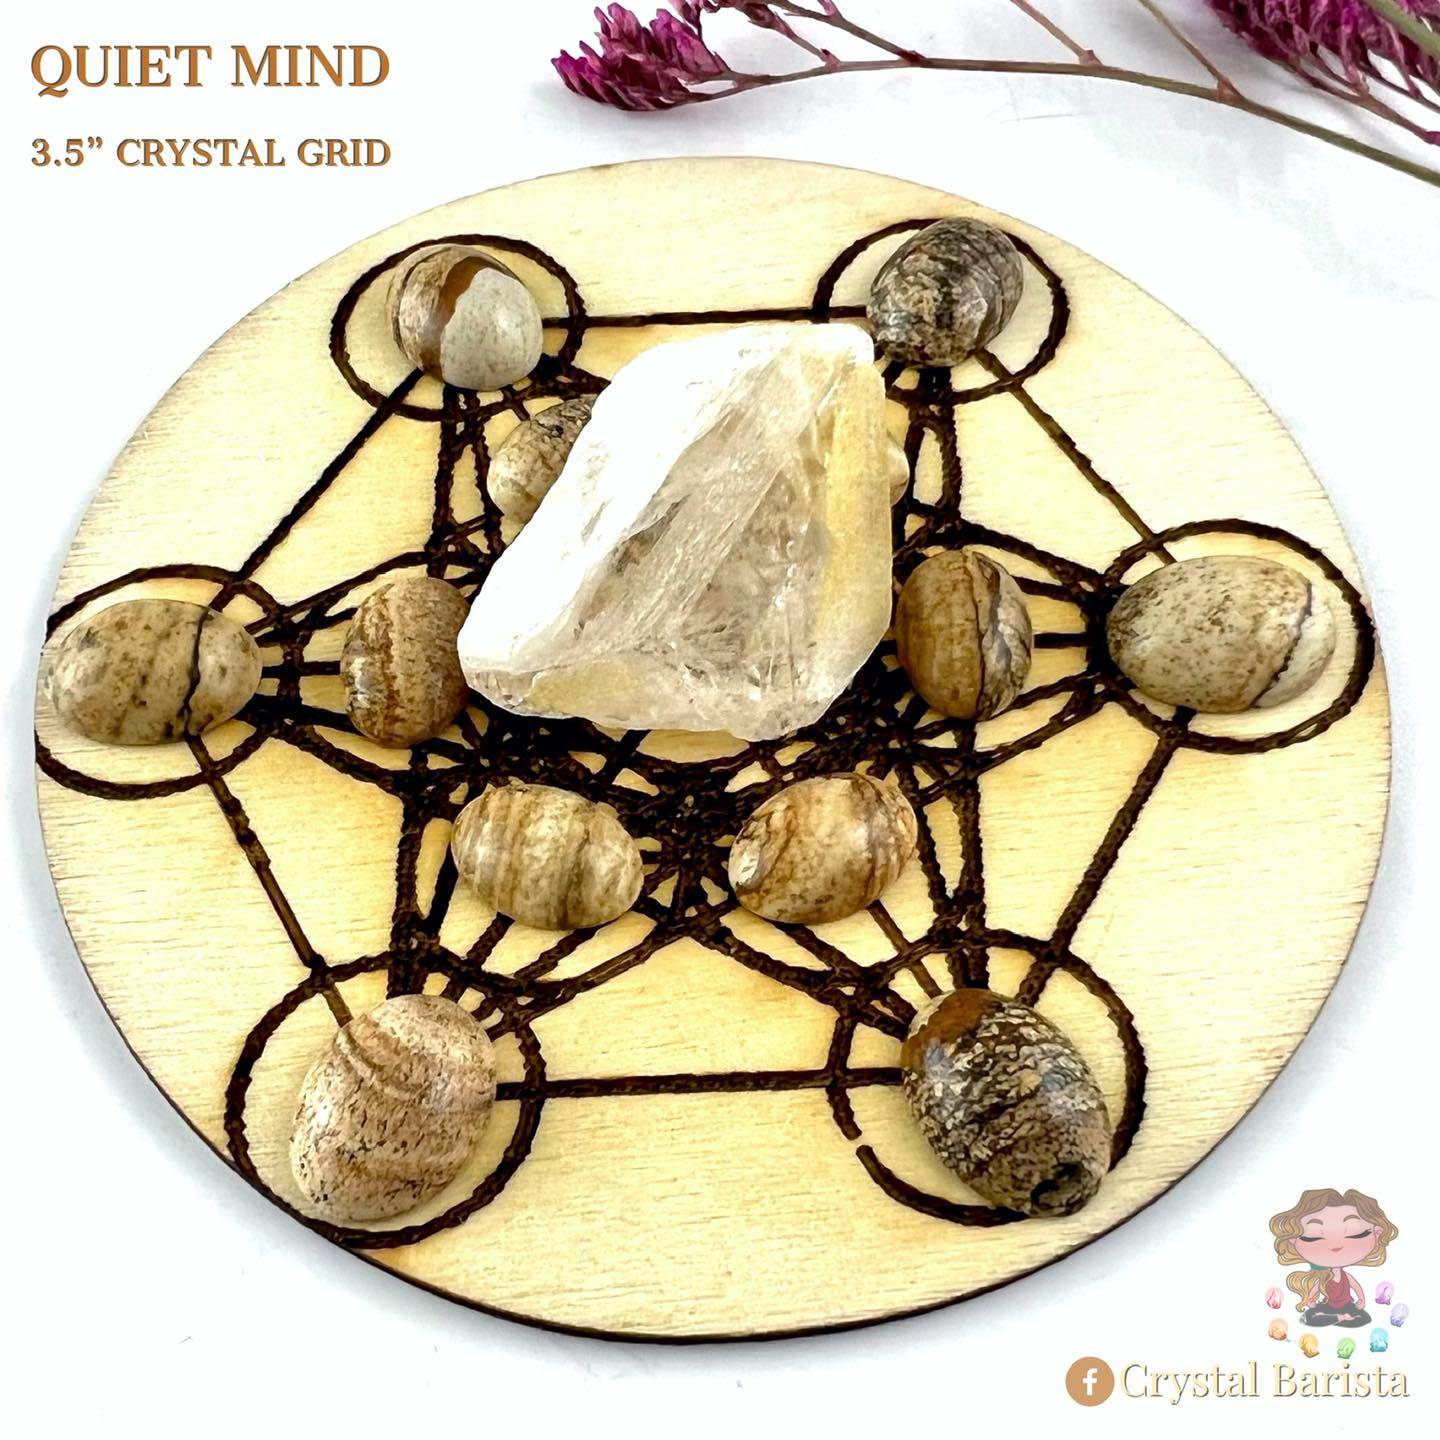 Quiet Mind - 3" Crystal Grid